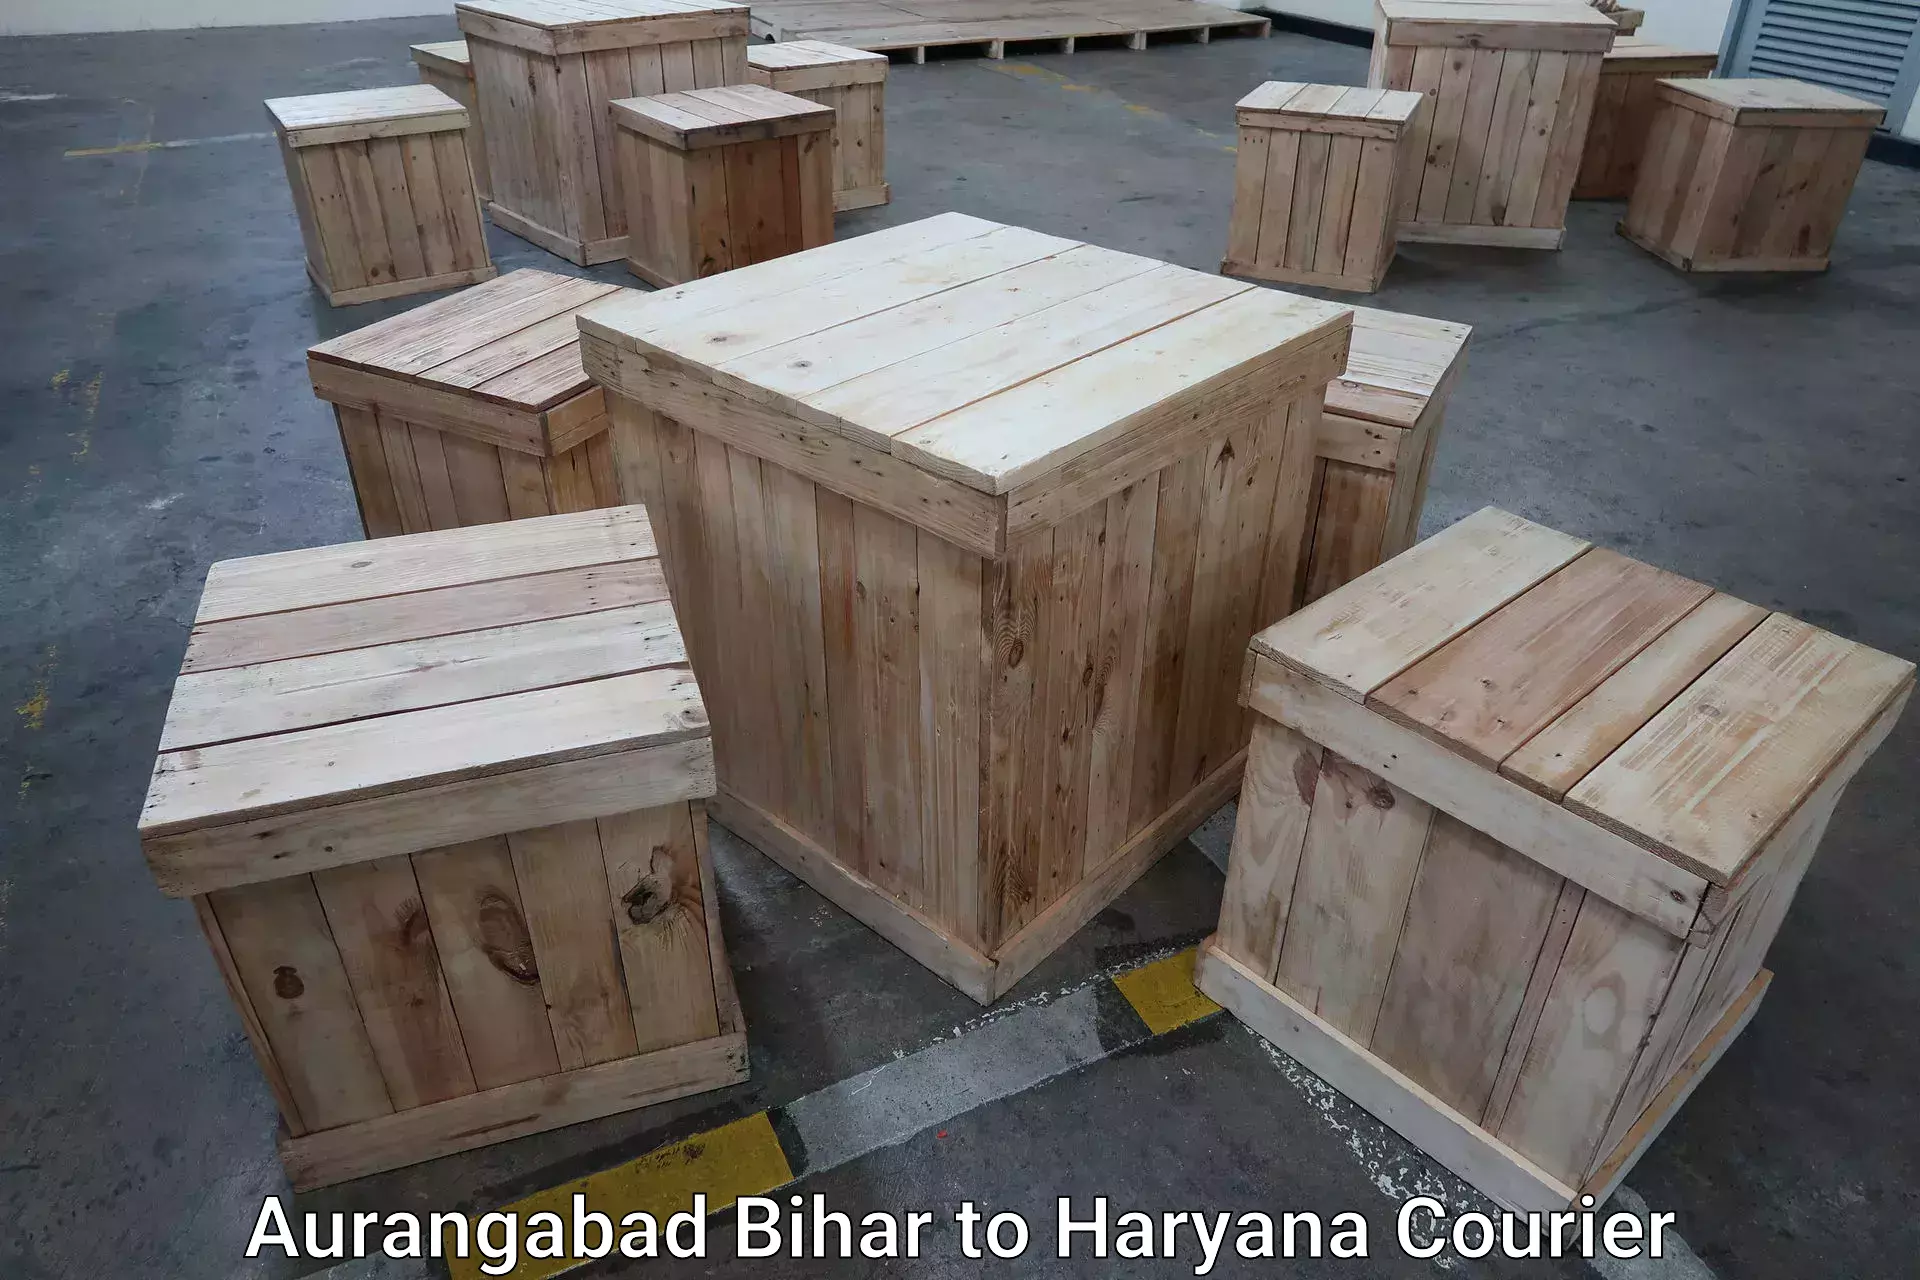 Luggage shipment tracking Aurangabad Bihar to Panipat